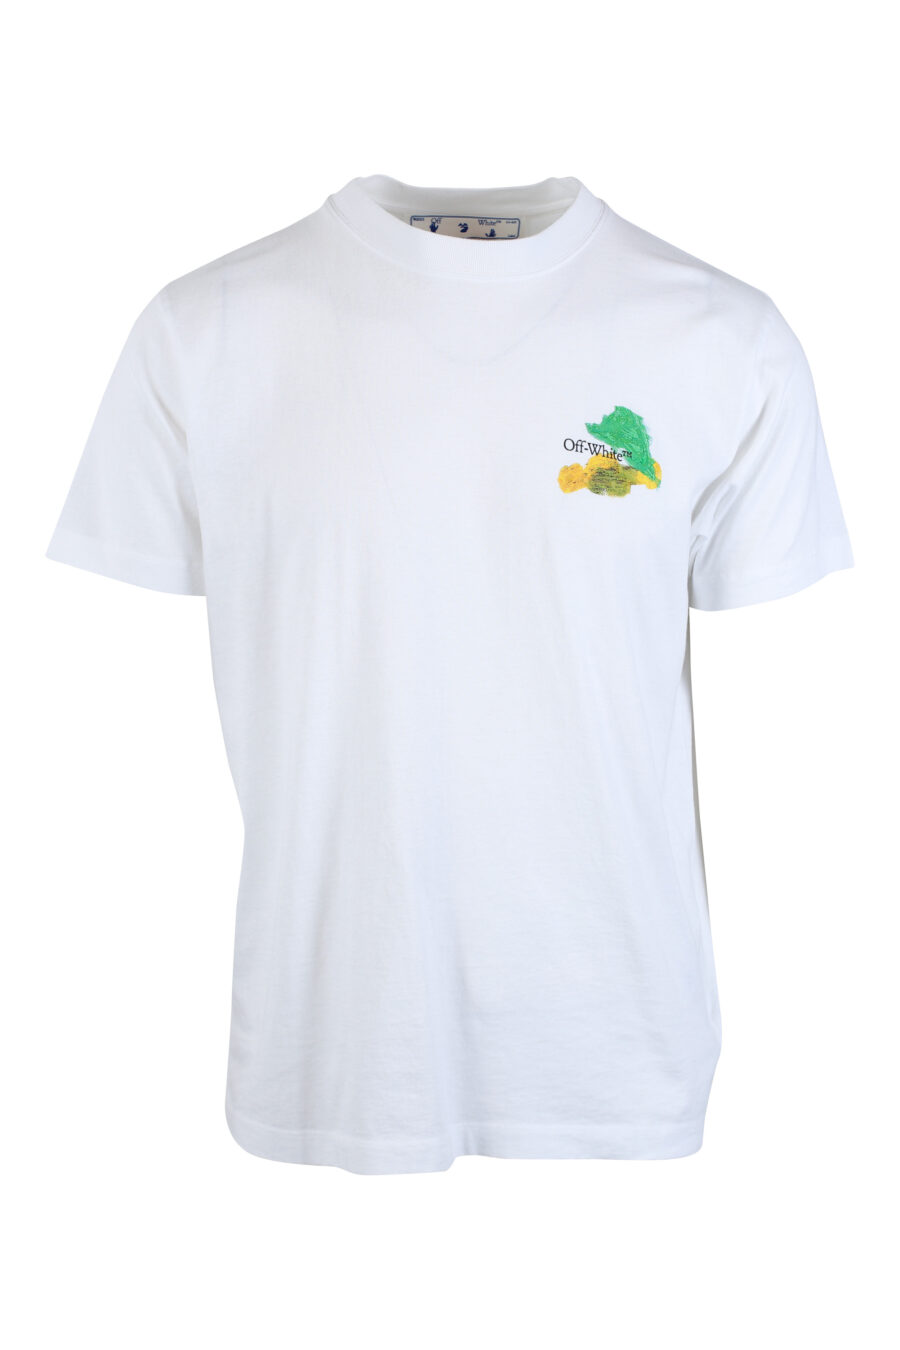 T-shirt branca com maxilogo "arrow" multicolorido nas costas - IMG 2620